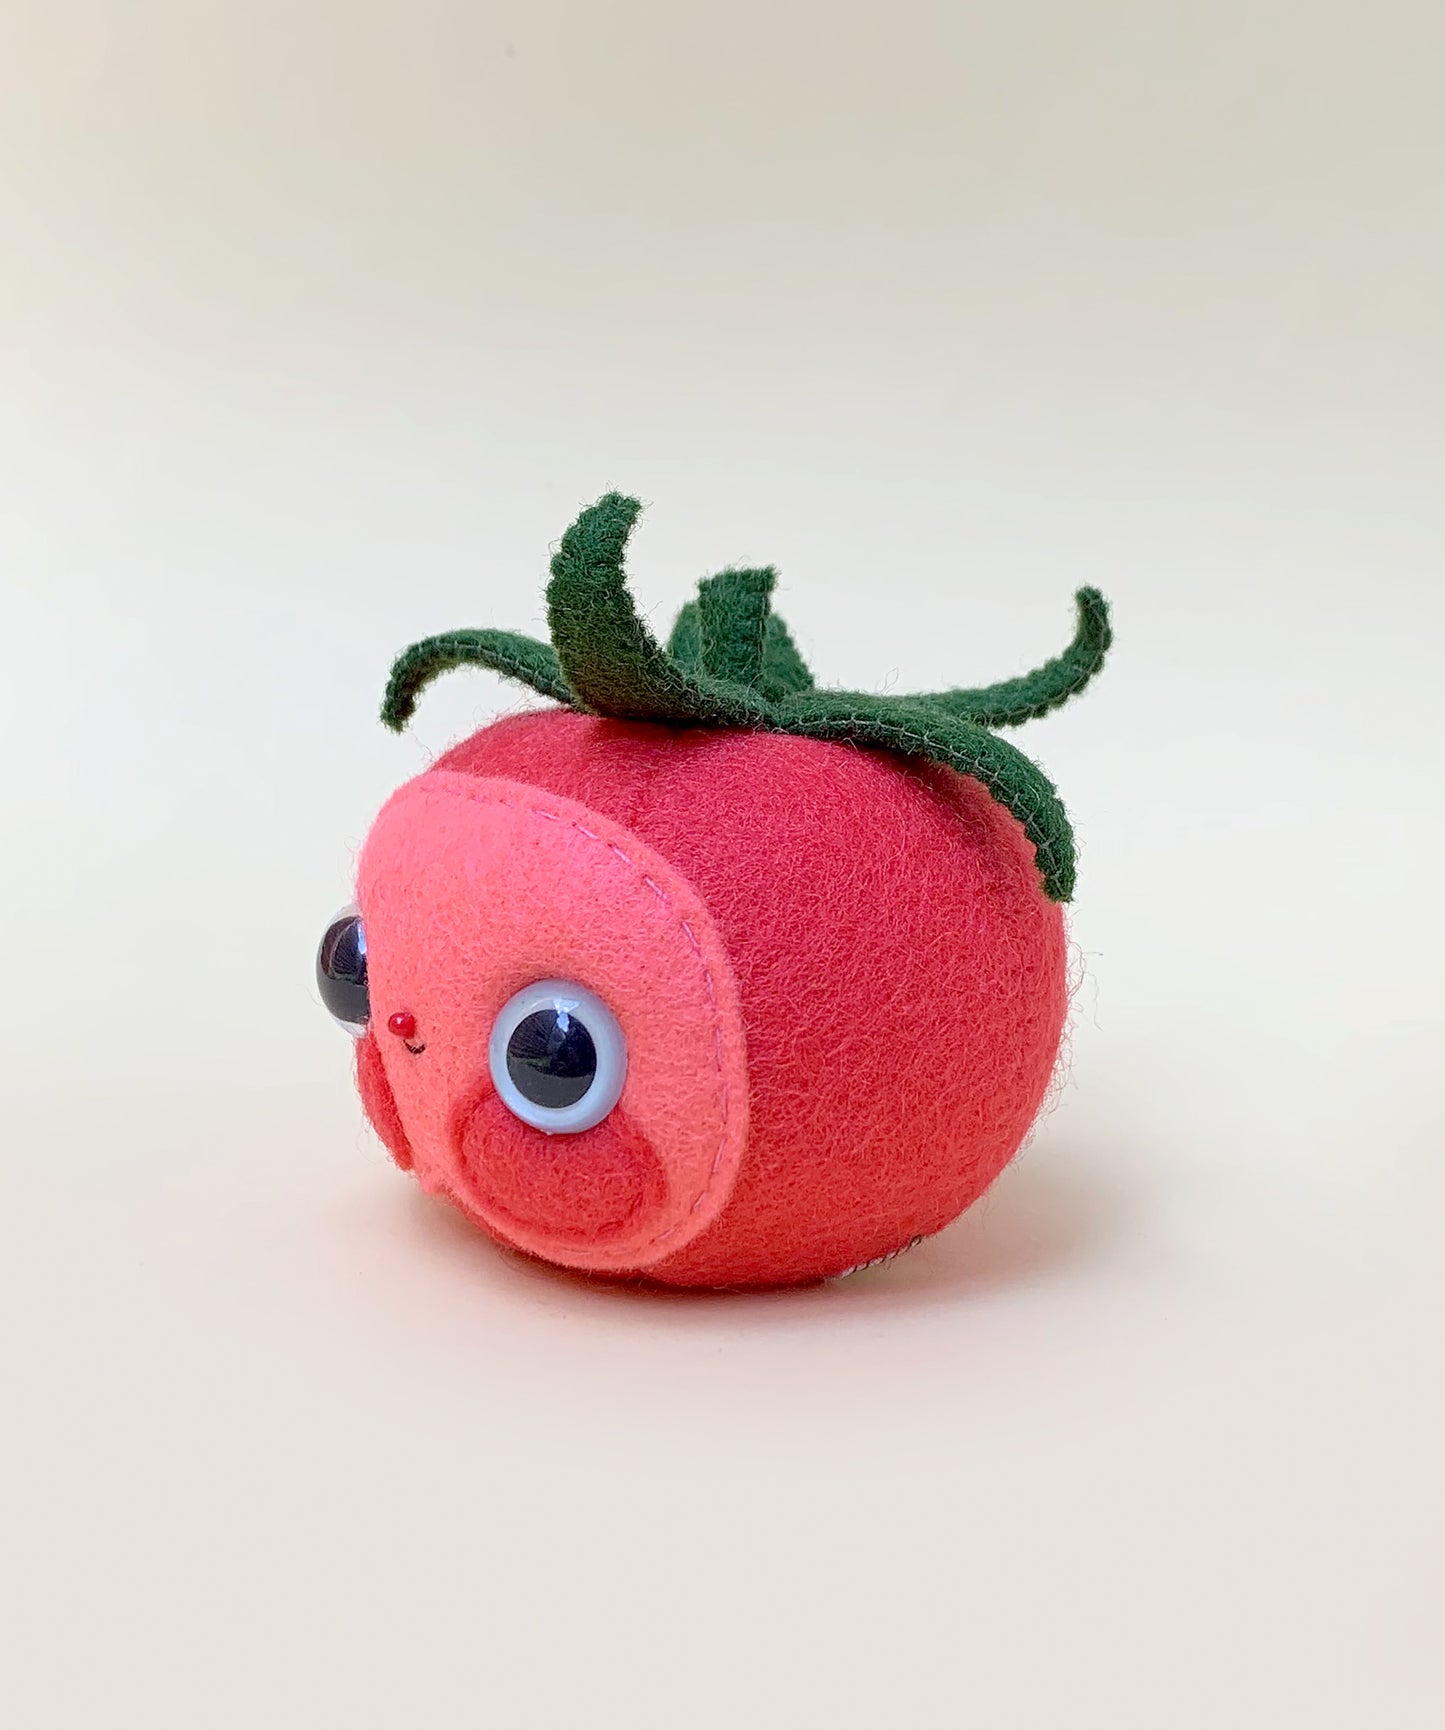 Little Tomato - Pin Cushion/Desk Friend